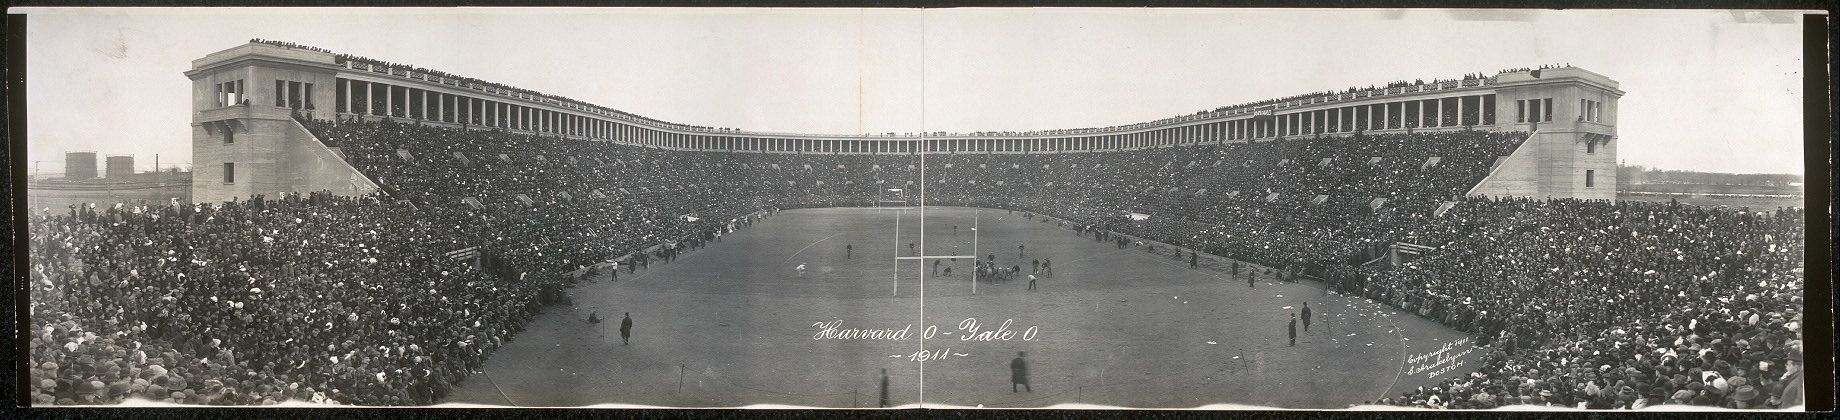 Harvard 0 - Yale 0, 1911